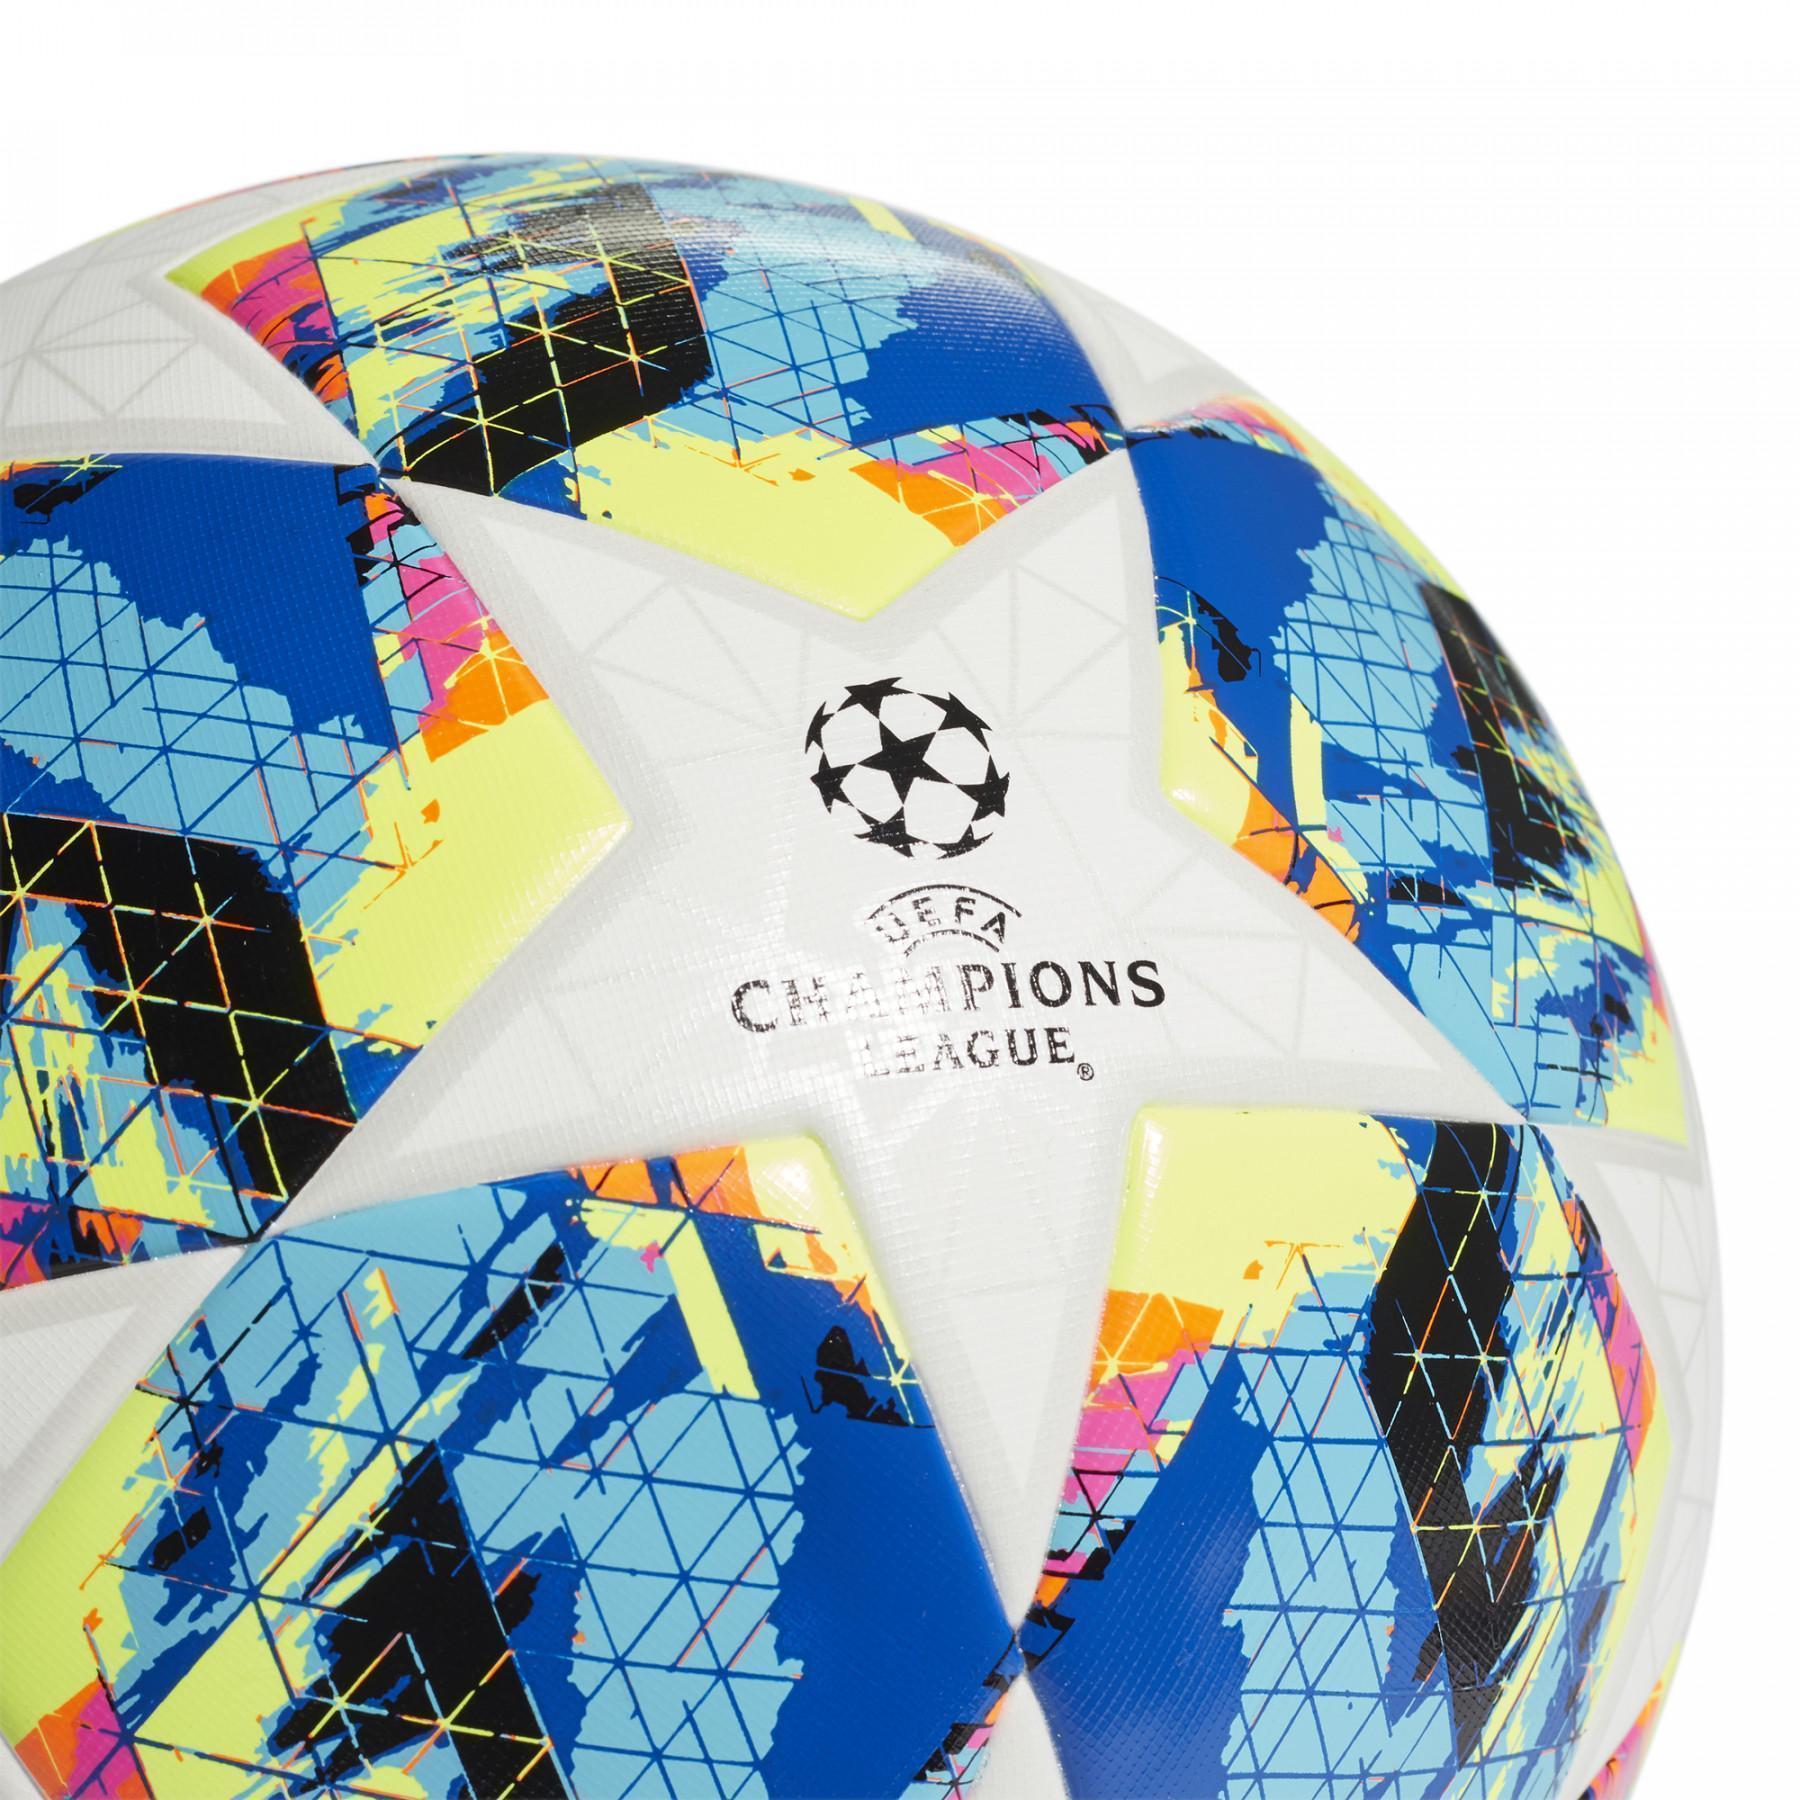 Balon adidas Finale Champions League 2020